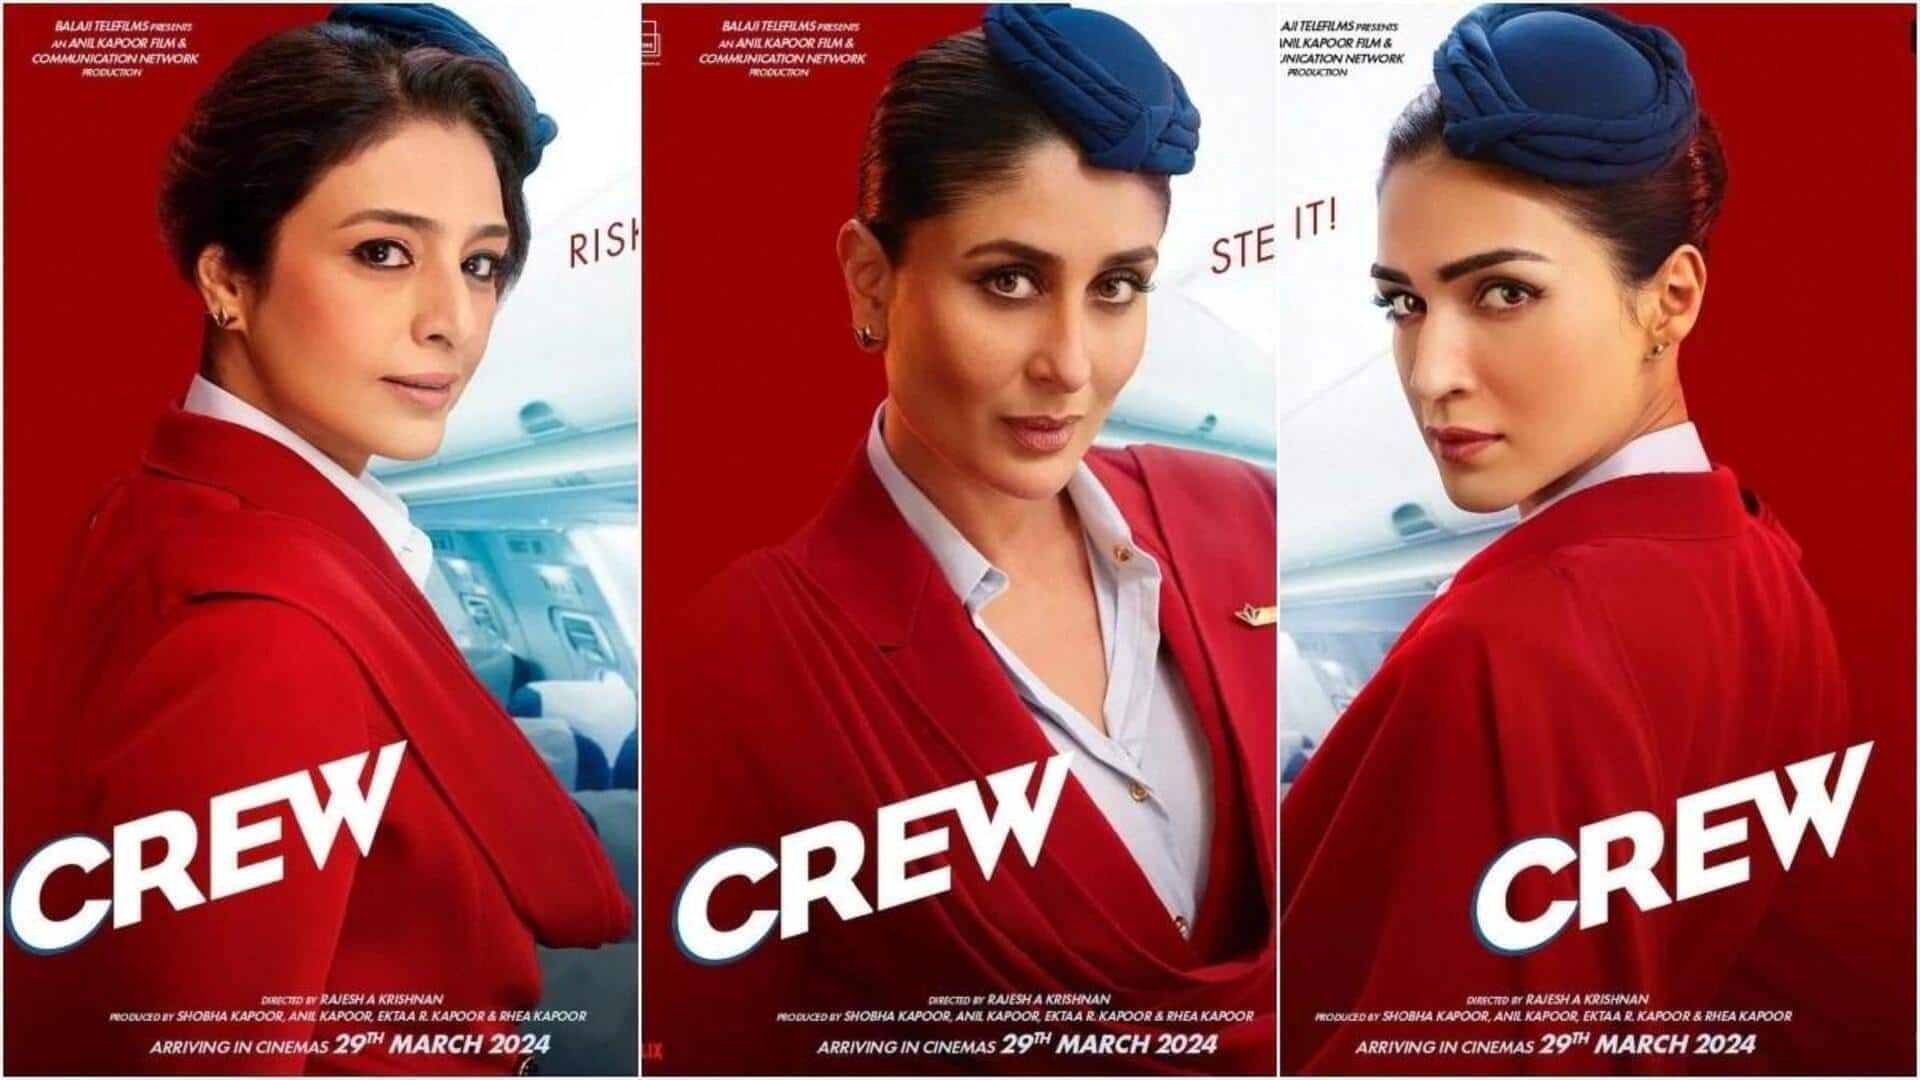 Box office: Kareena-Tabu-Kriti's 'Crew' experiences a dip on Day 11